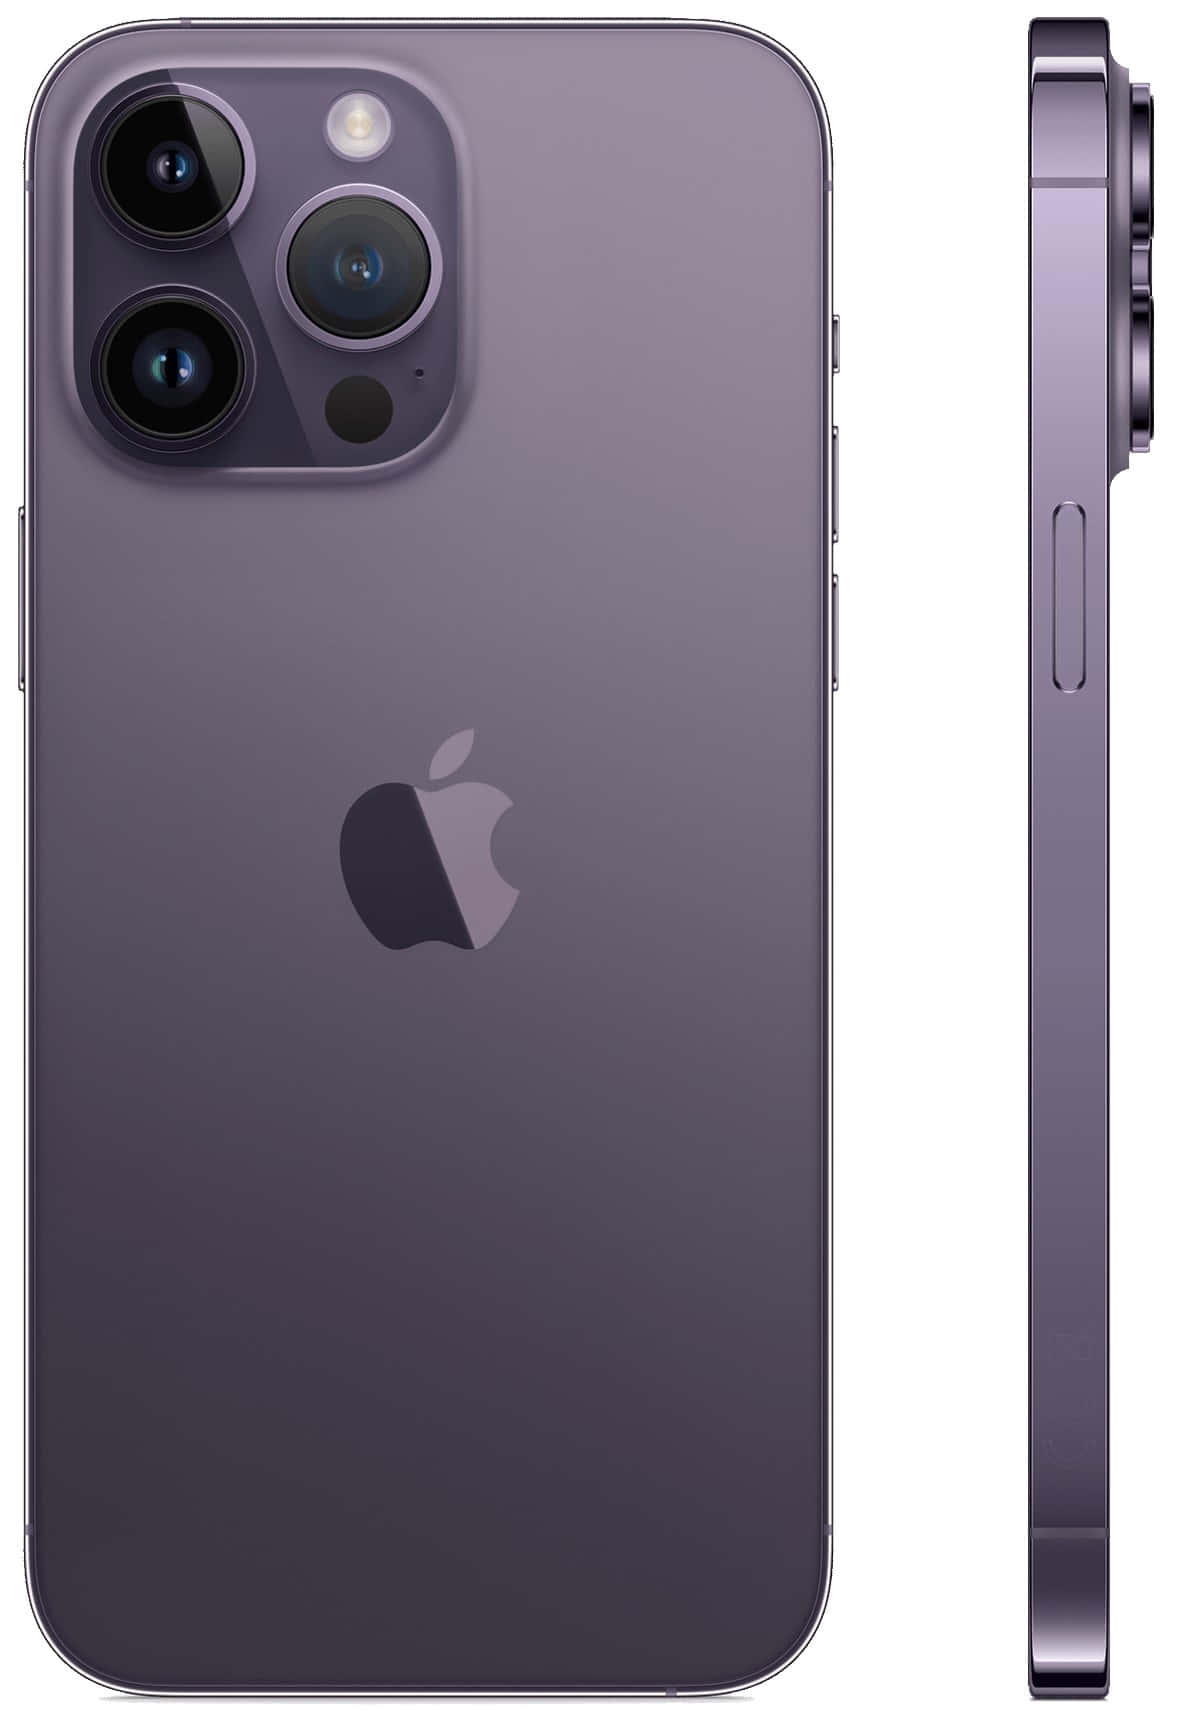 Purplei Phone14 Pro Max Backand Side View Wallpaper